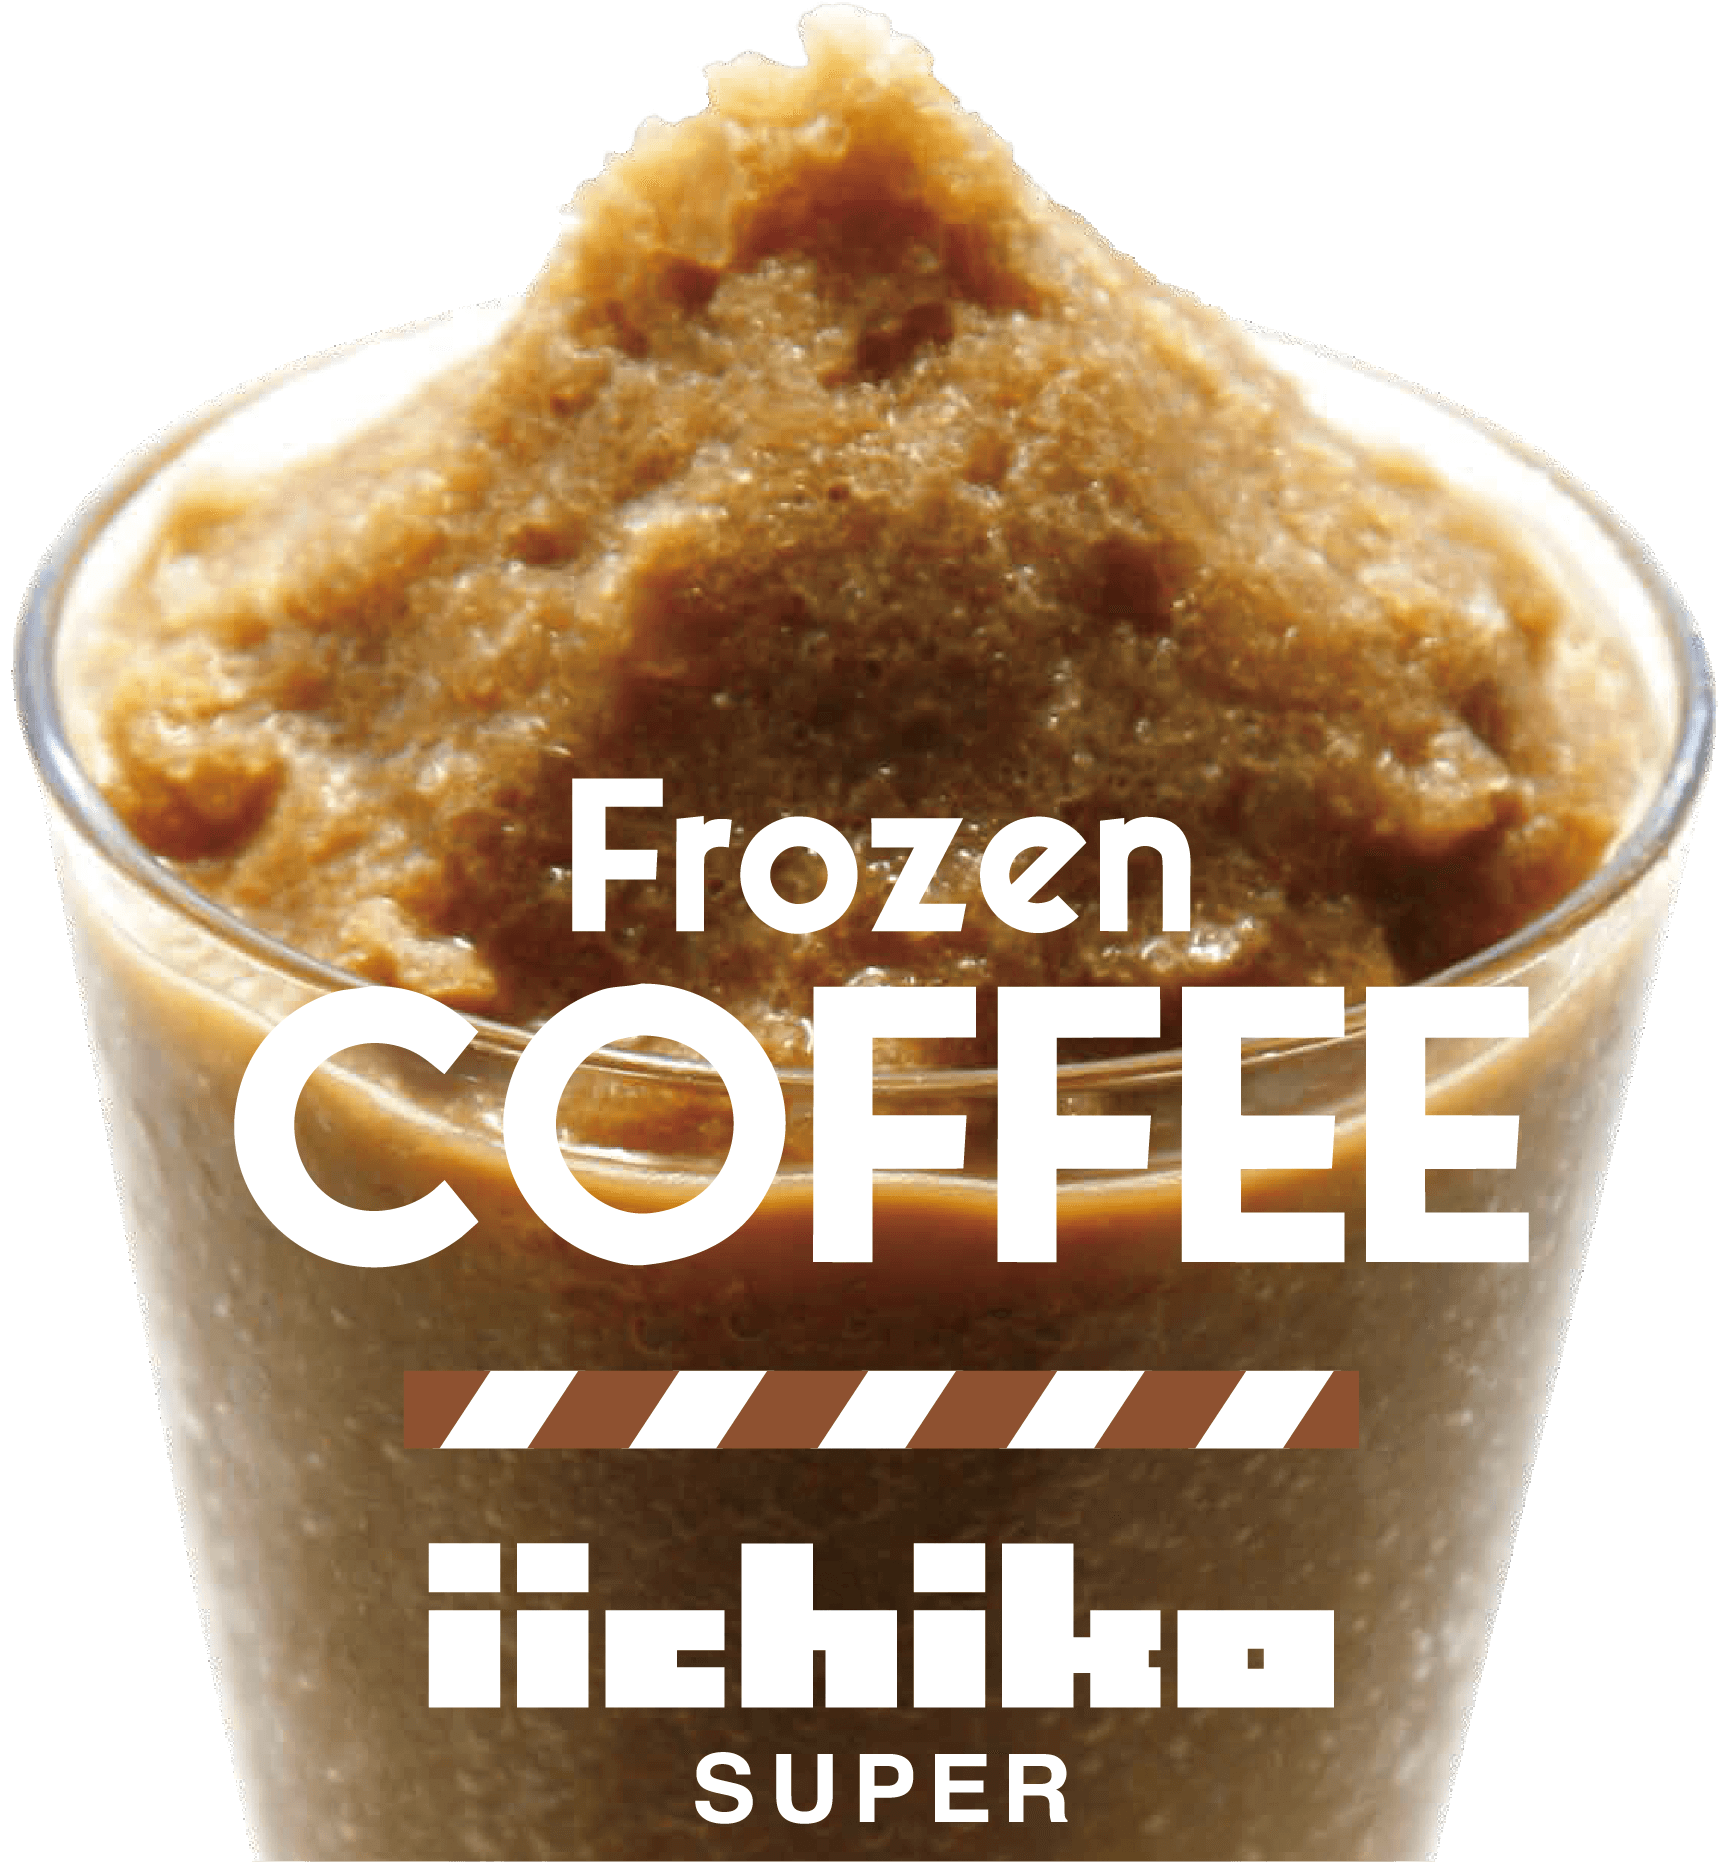 Frozen COFFEE iichiko SUPER